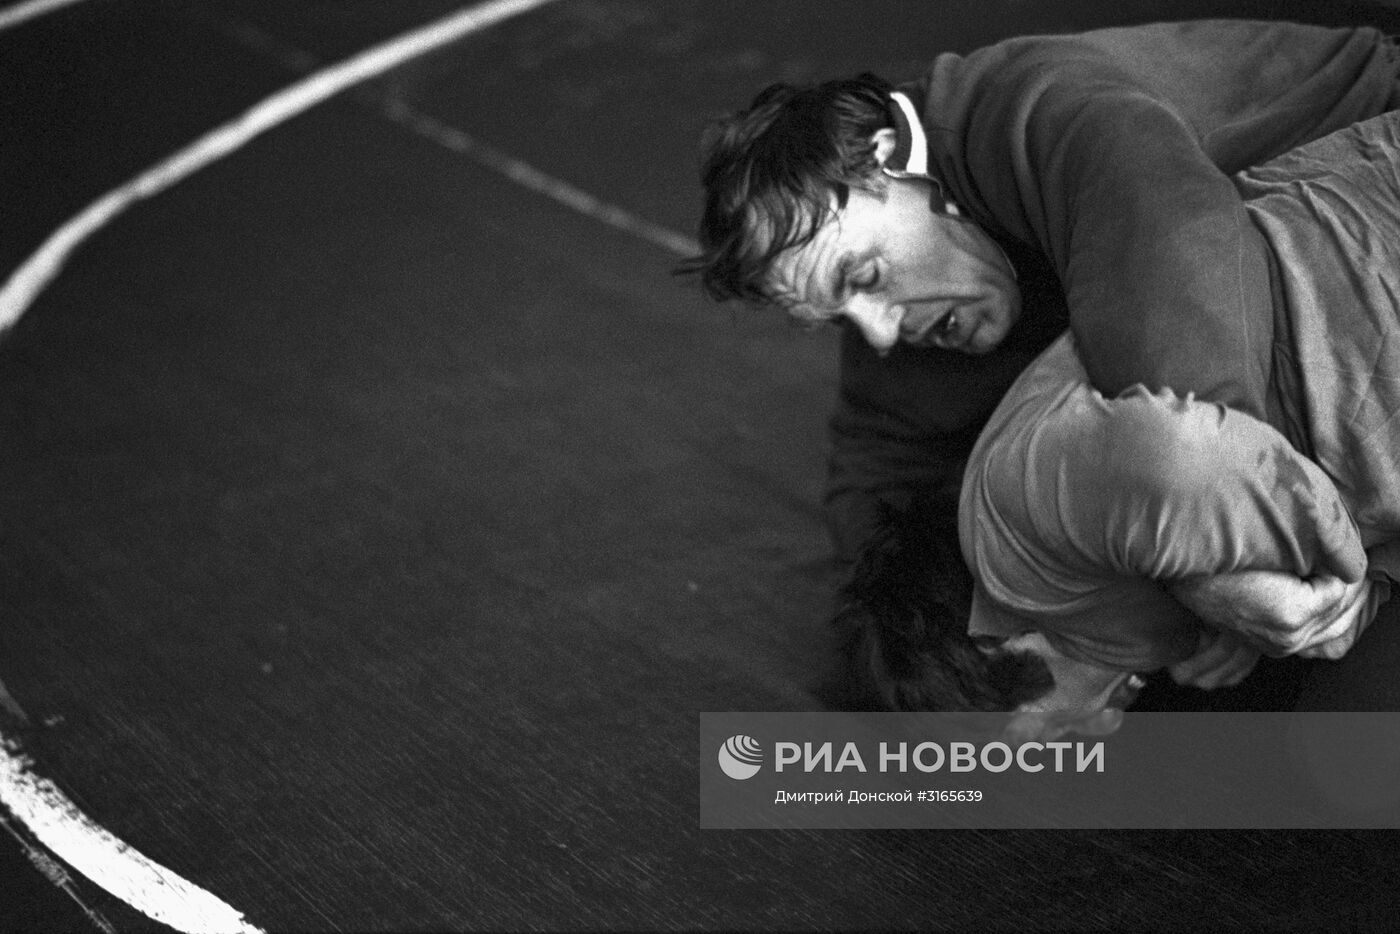 Борец Н.Балбошин и тренер А.И.Парфенов